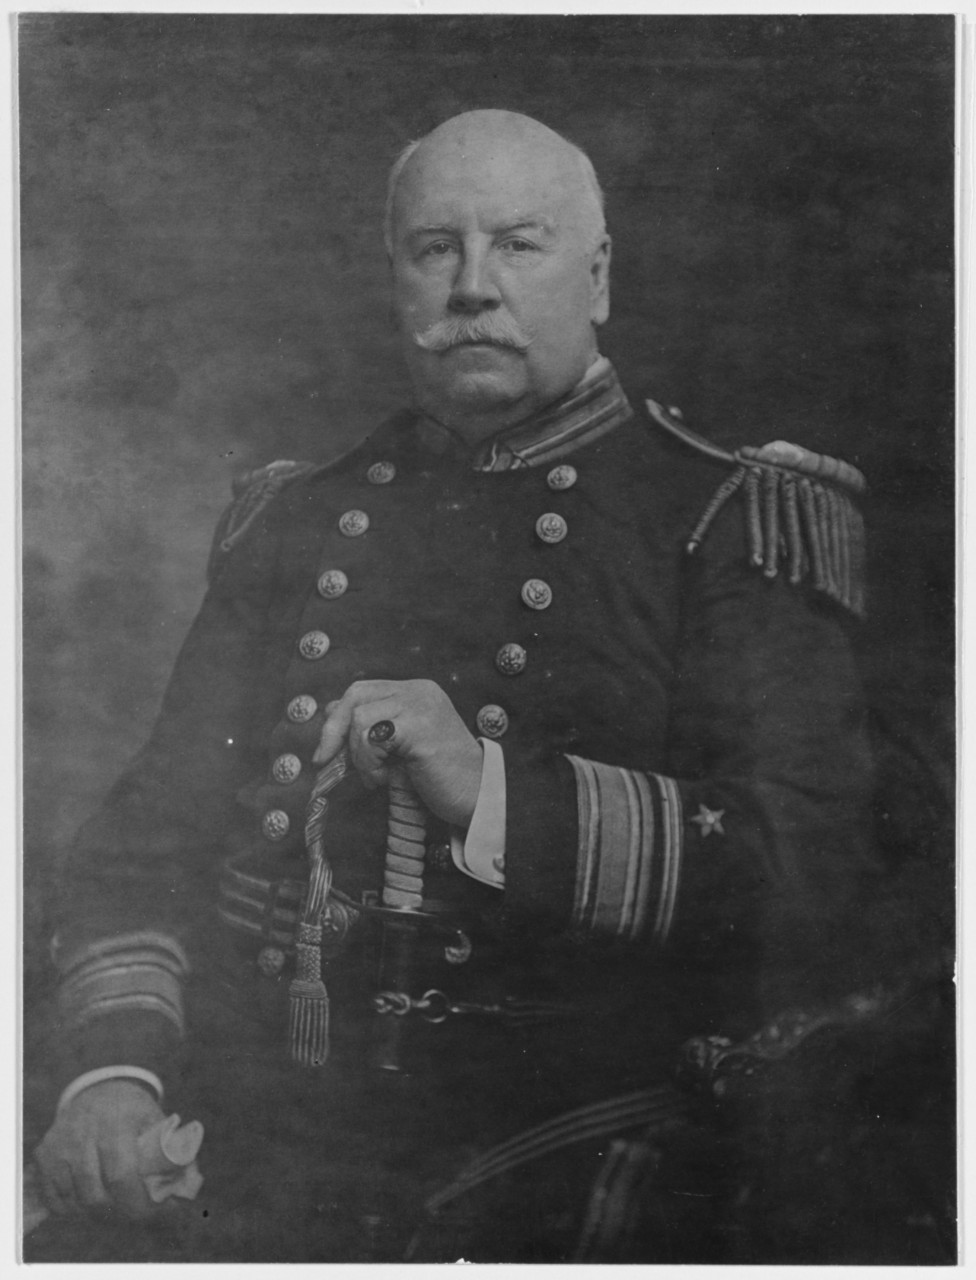 Rear Admiral Charles O'Neil, USN